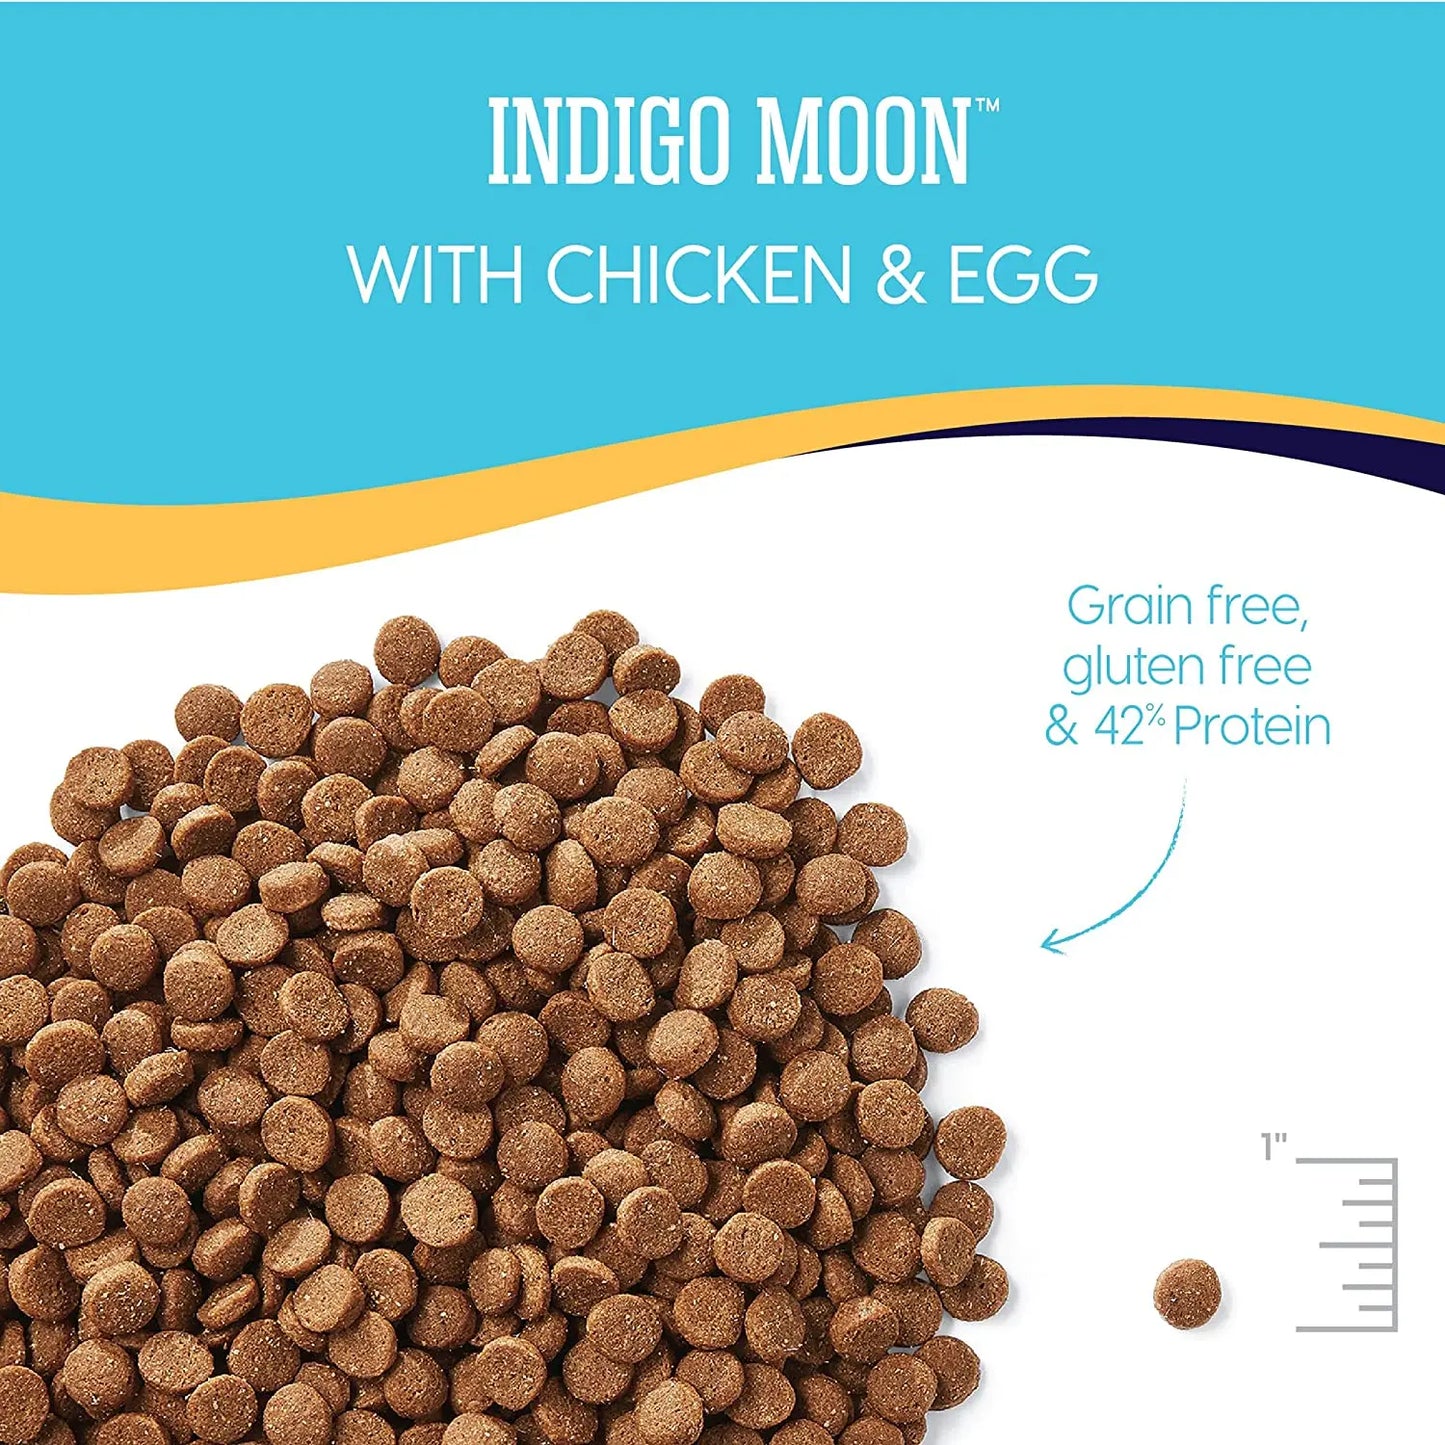 Solid Gold® Indigo Moon® Grain Free Chicken & Egg High Protien Cat Food Solid Gold